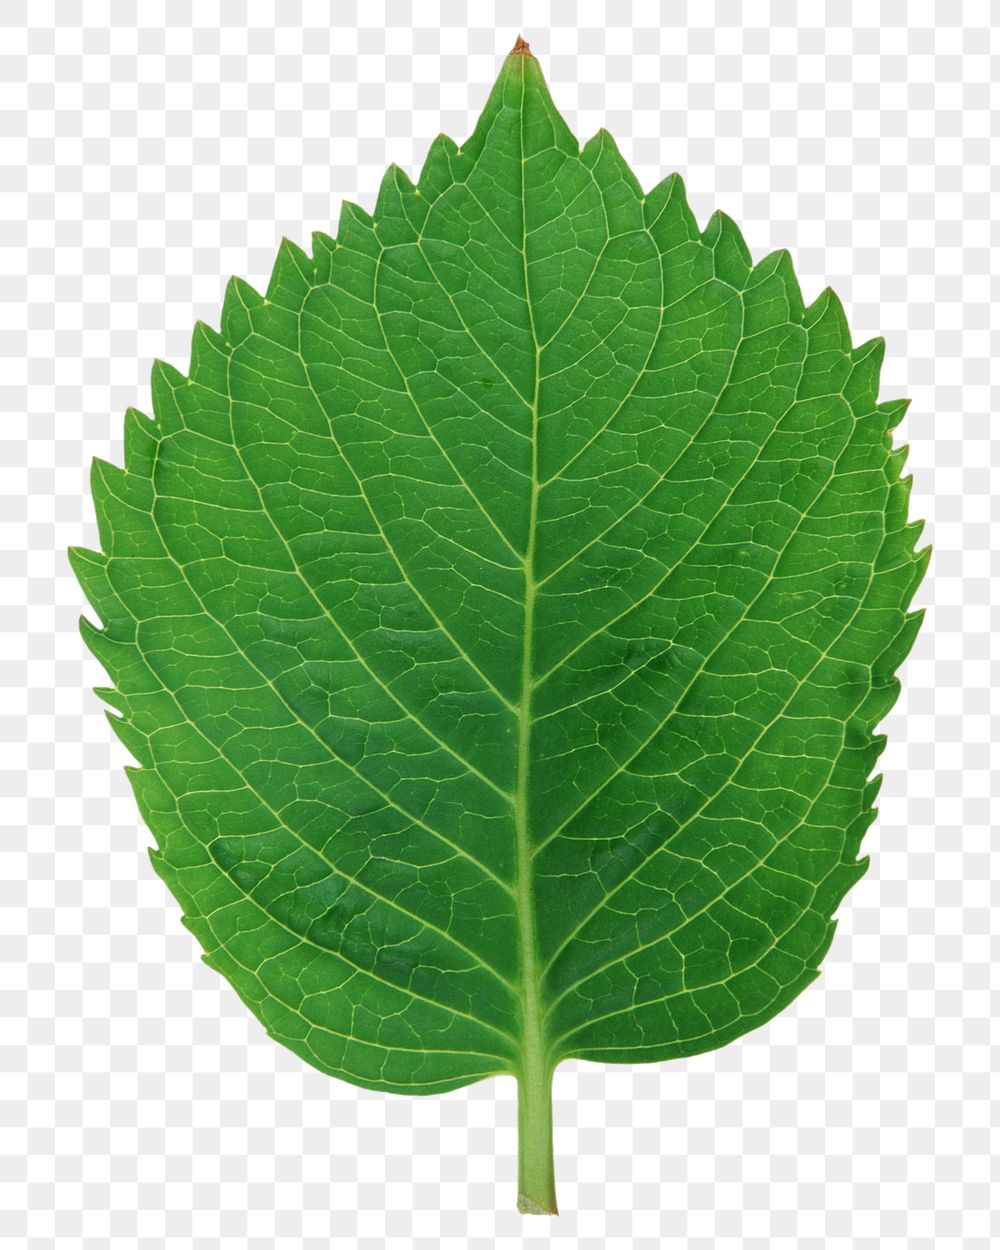 Green Perilla leaf png, transparent background